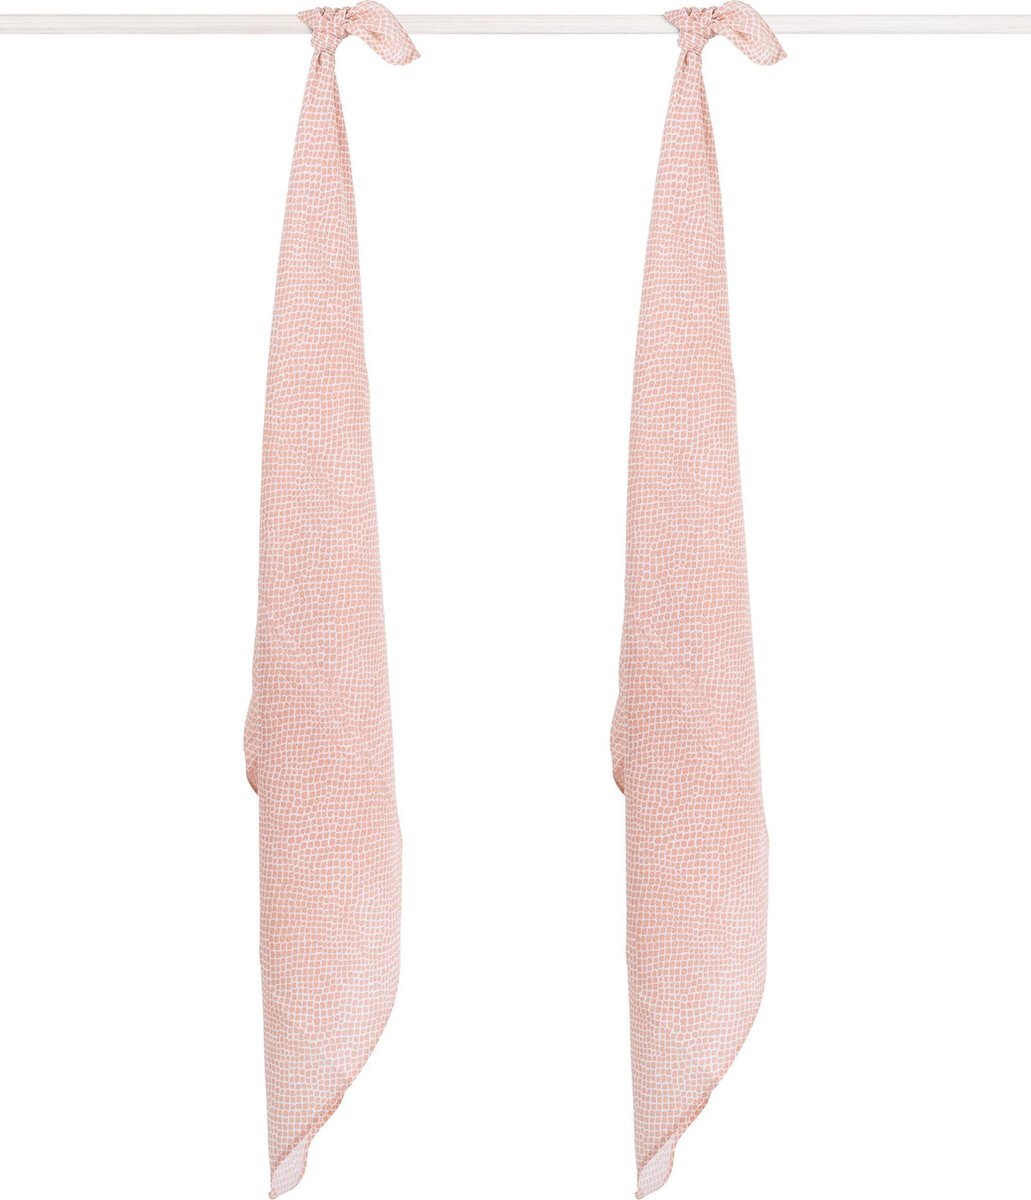 Jollein Gaasluiers 2-pack Slangen lichtroze 115x115cm roze